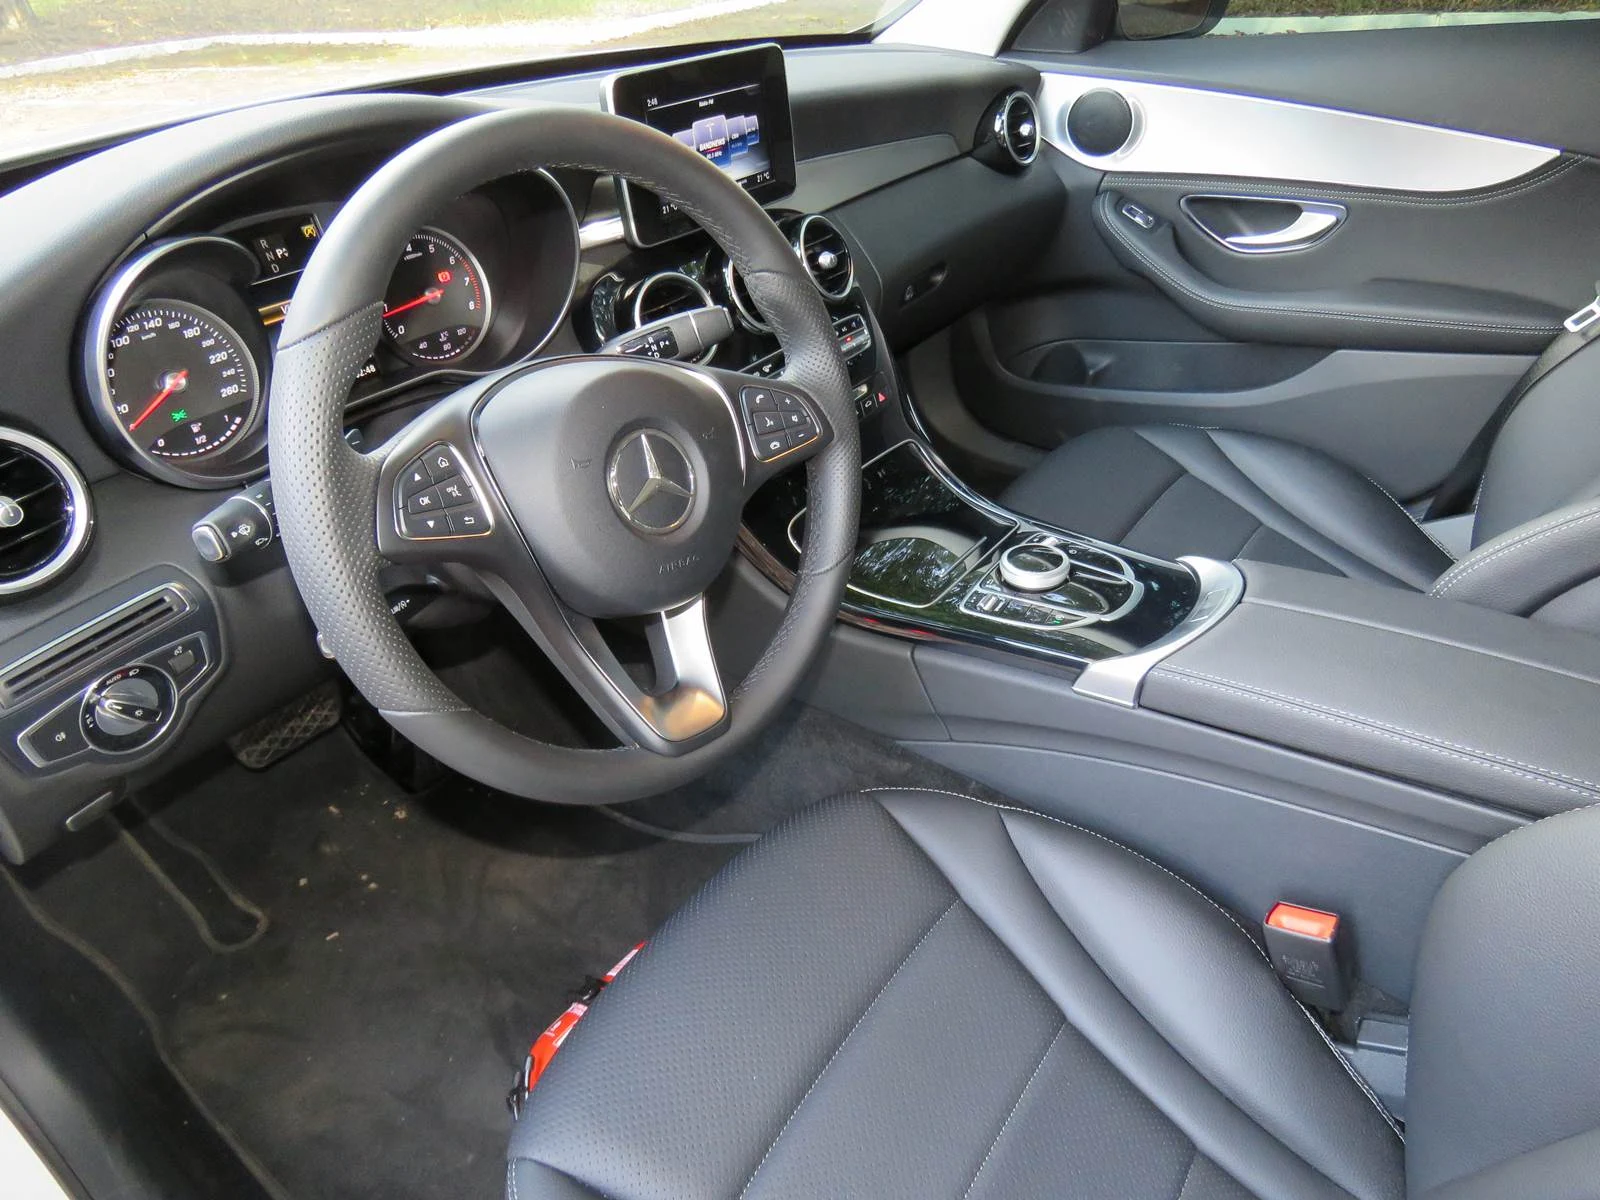 Mercedes-Benz C 180 2016 - interior